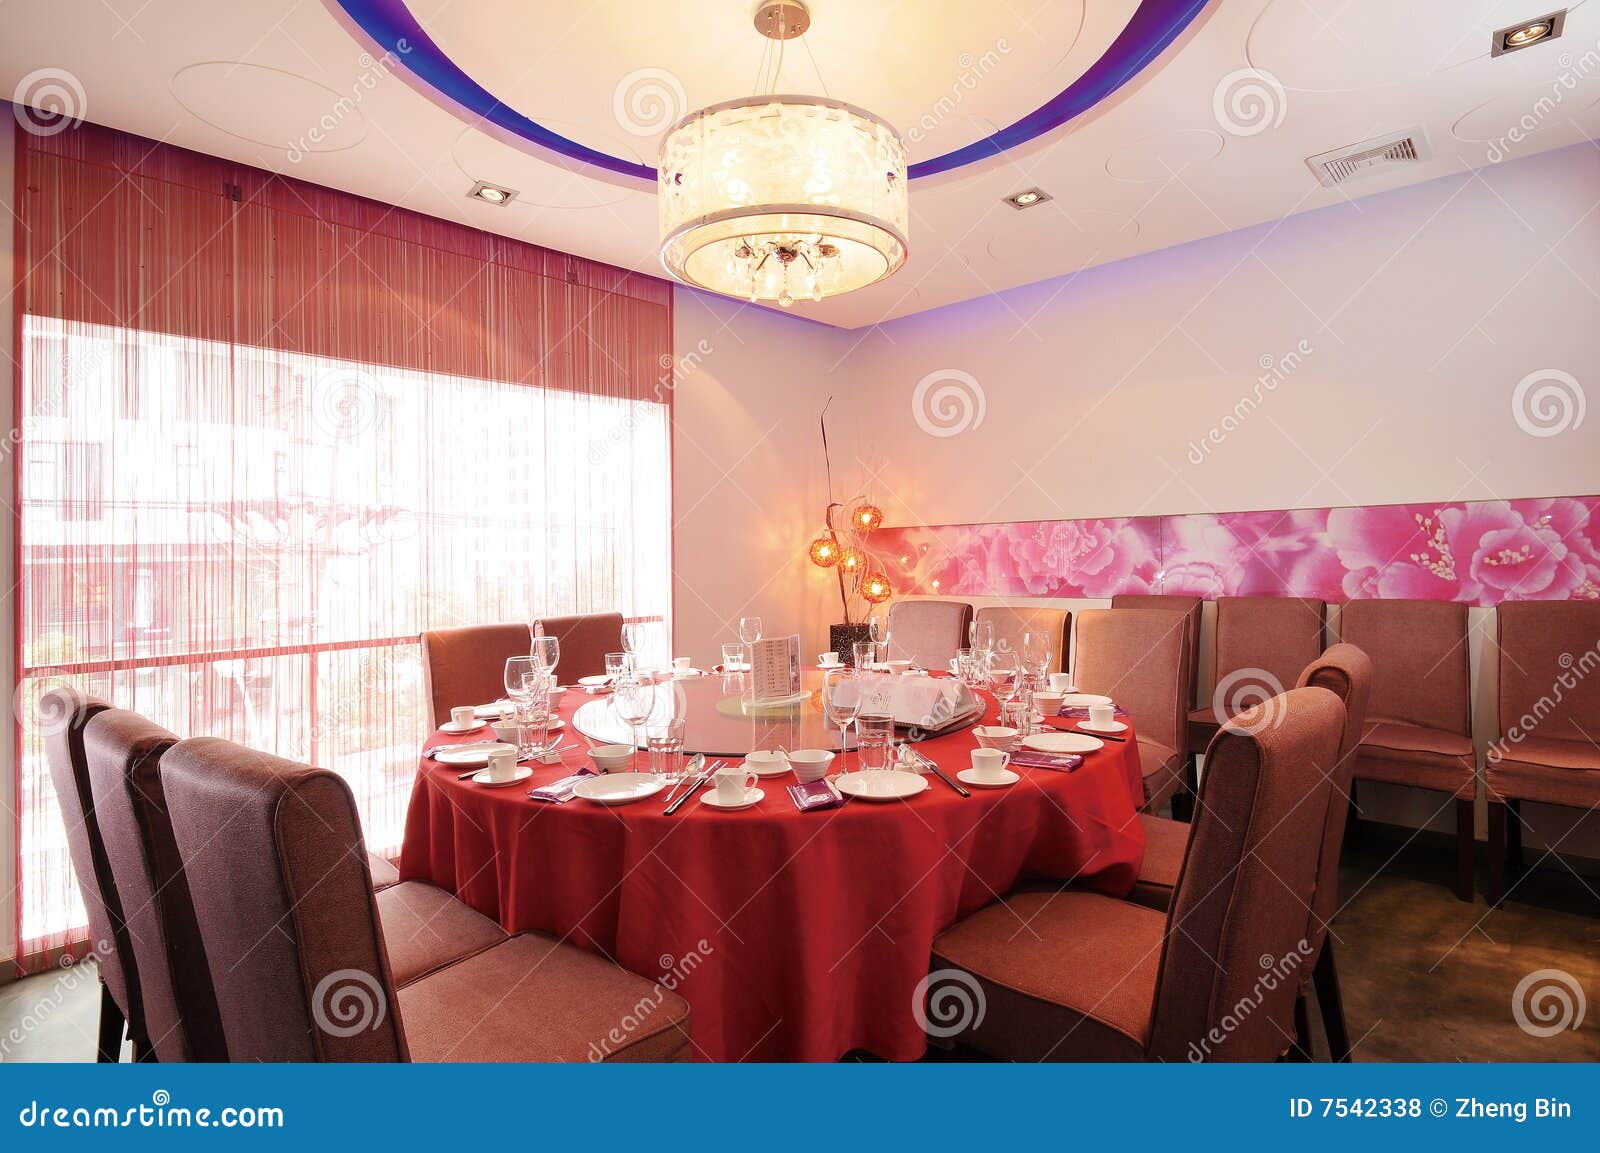 Chinese Restaurant stock photo. Image of decor, light - 7542338